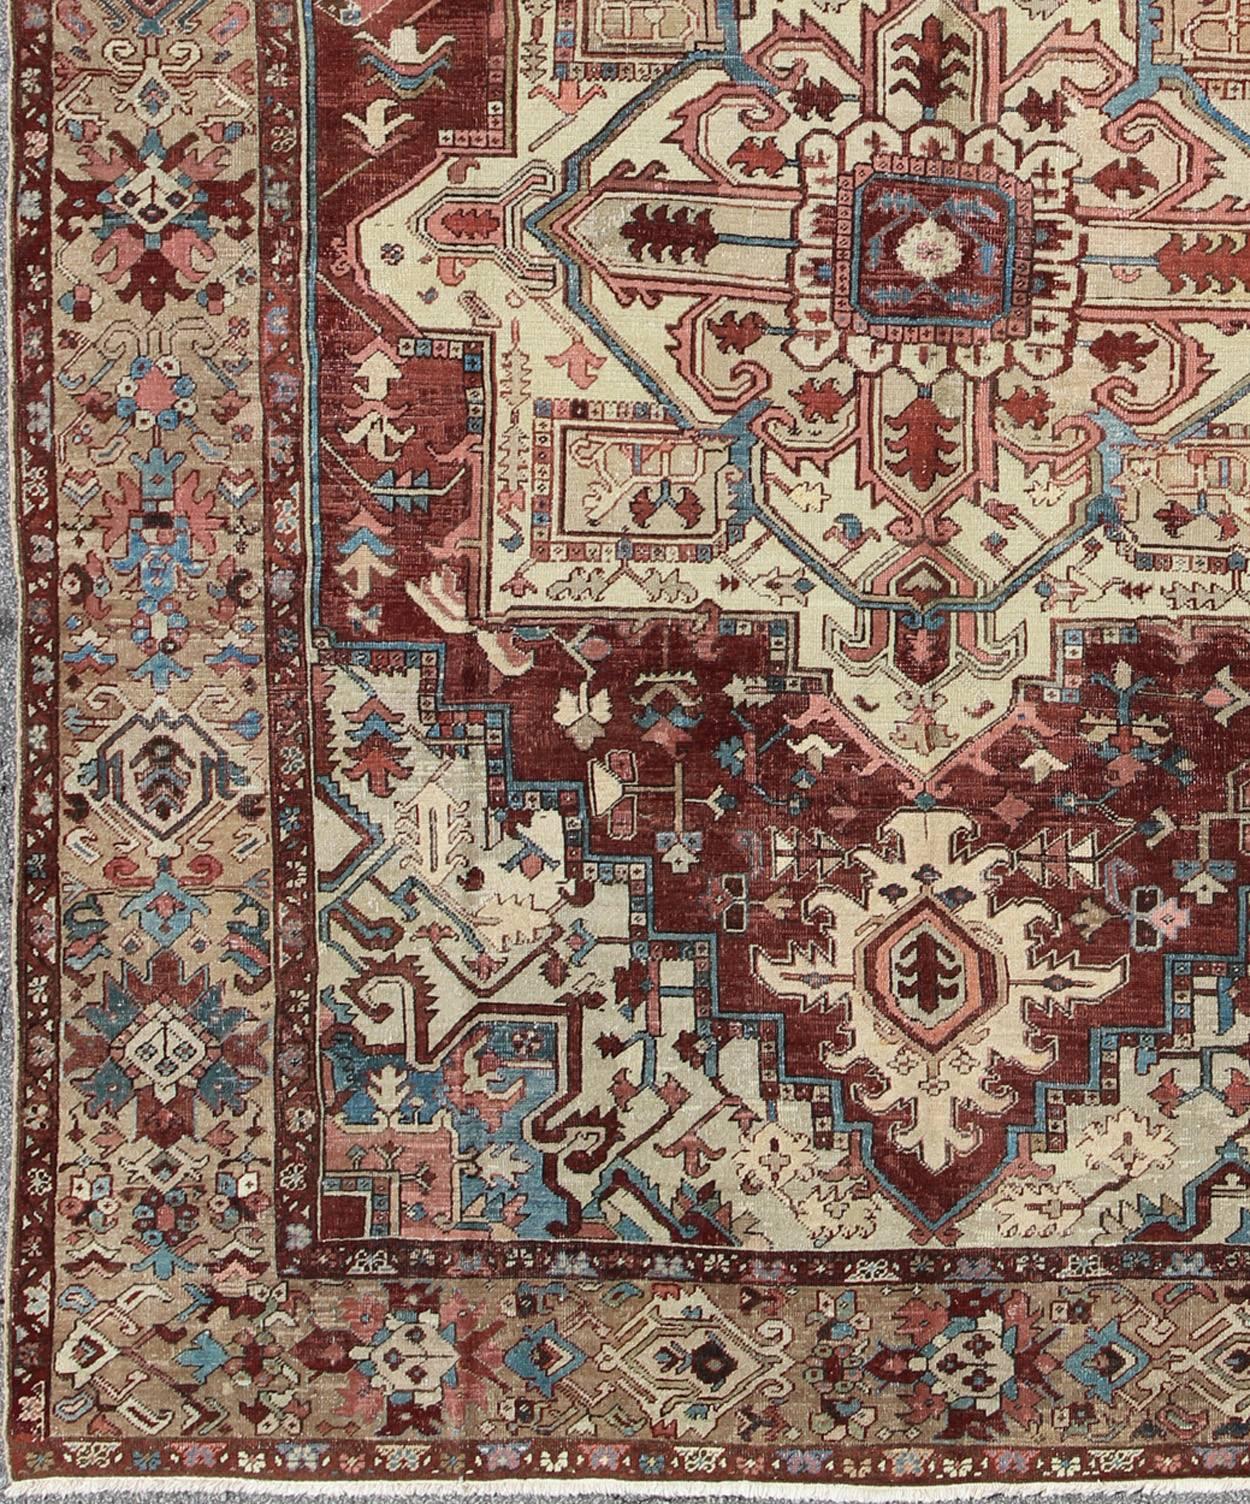 Antique Persian Serapi Carpet With Medallion In Reddish Brown, Tan and Light Blue. Keivan Woven Arts / rug E-0402, country of origin / type: Iran / Serapi, circa 1890. 
Measures: 9'10 x 11'10
This late 19th Century Persian Serapi Rug has a center